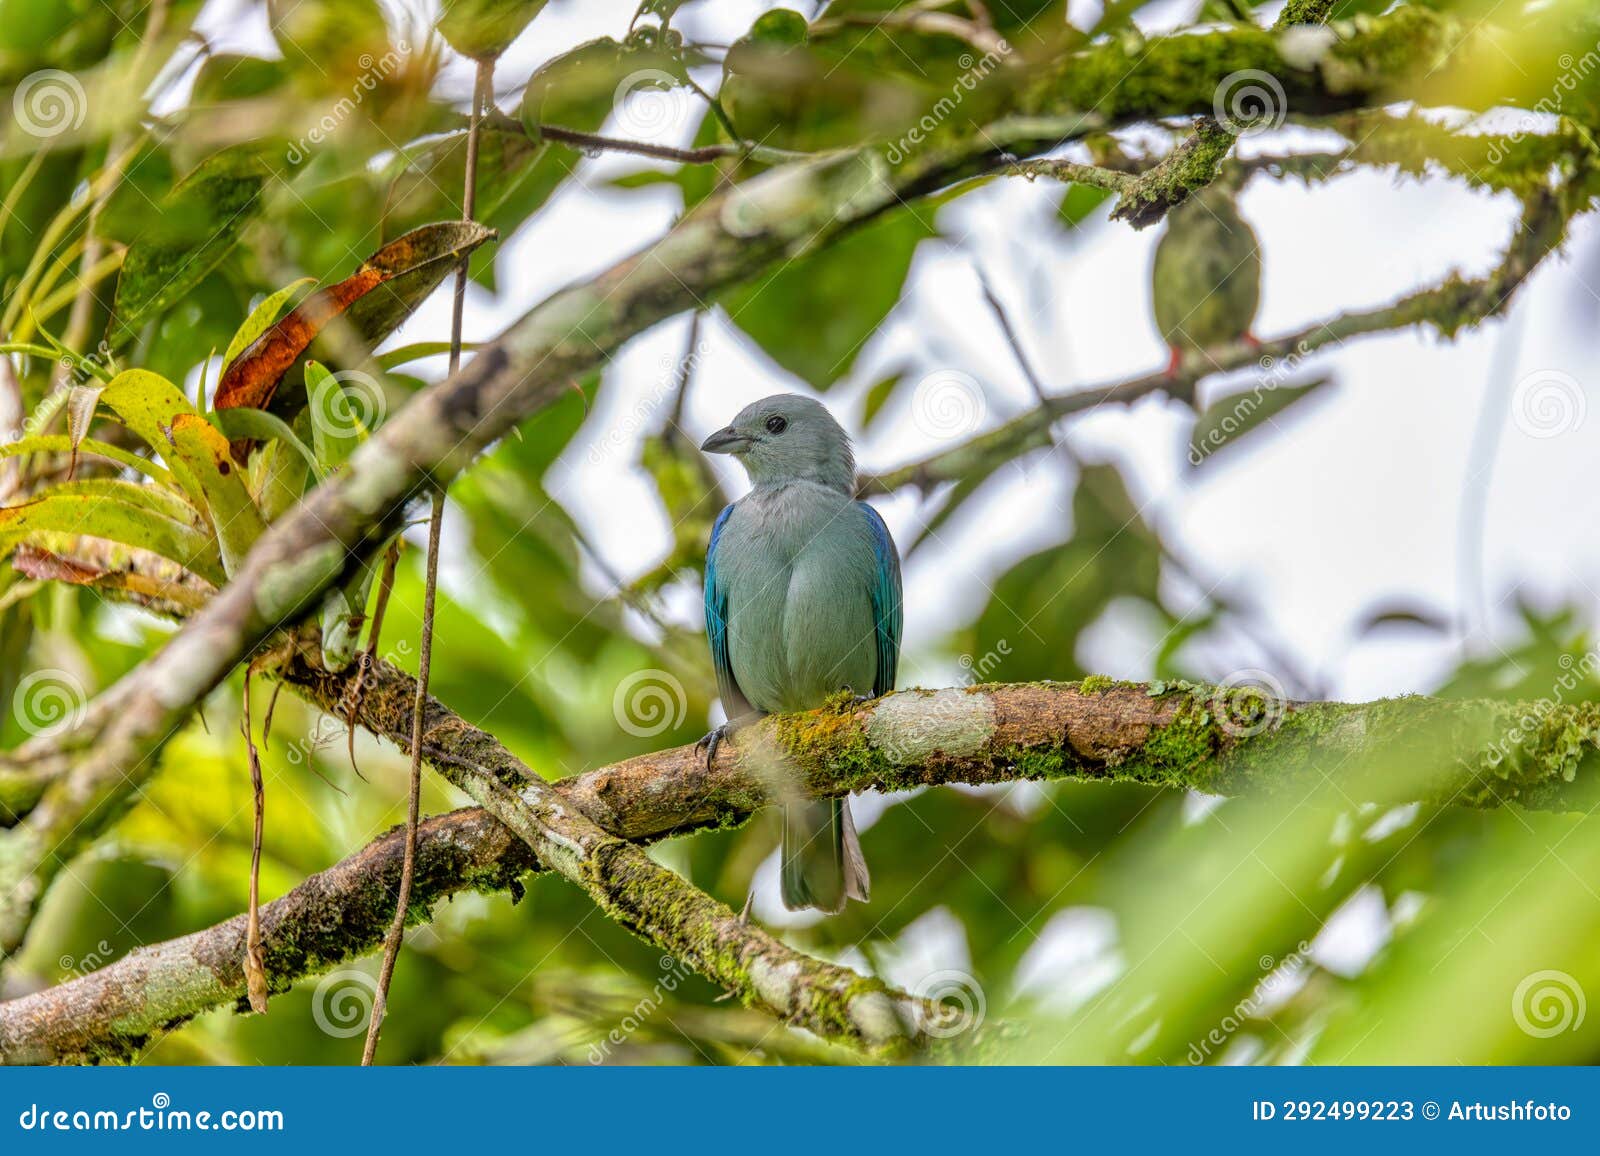 blue-gray tanager - thraupis episcopus, refugio de vida silvestre cano negro, wildlife and bird watching in costa rica